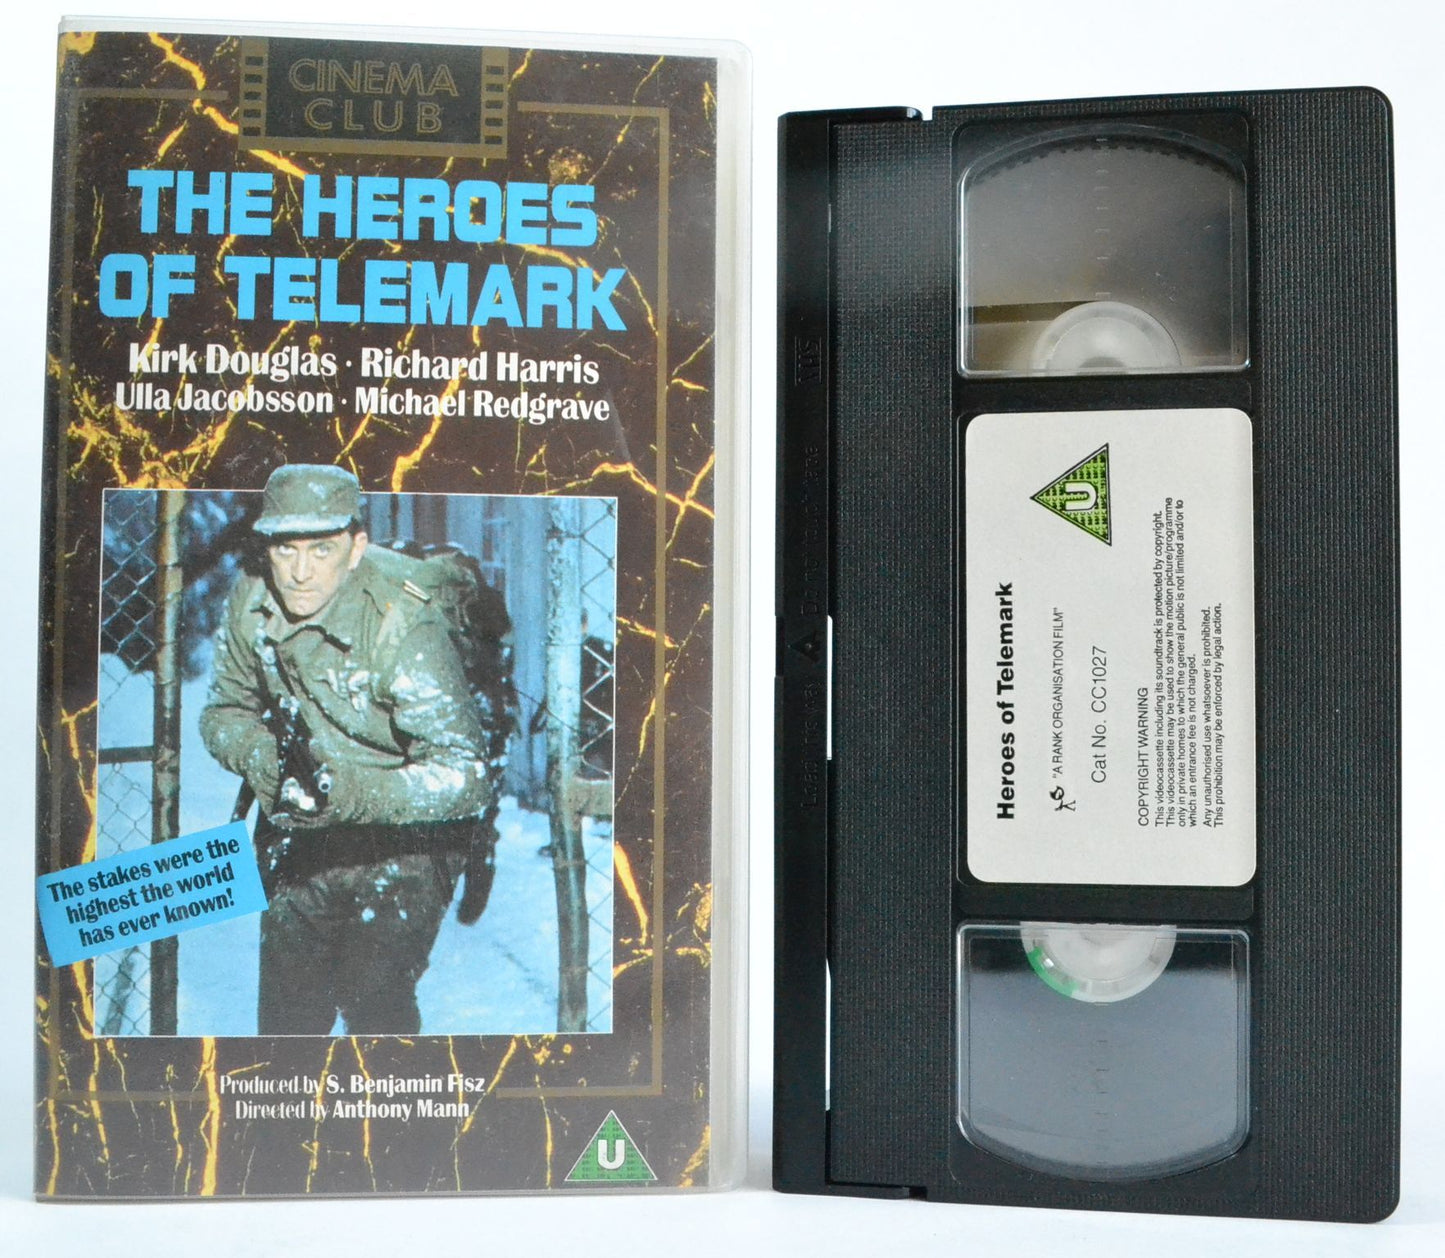 The Heroes Of Telemark: Kirk Douglas - Anthony Mann - Cinema Club (1989) VHS-